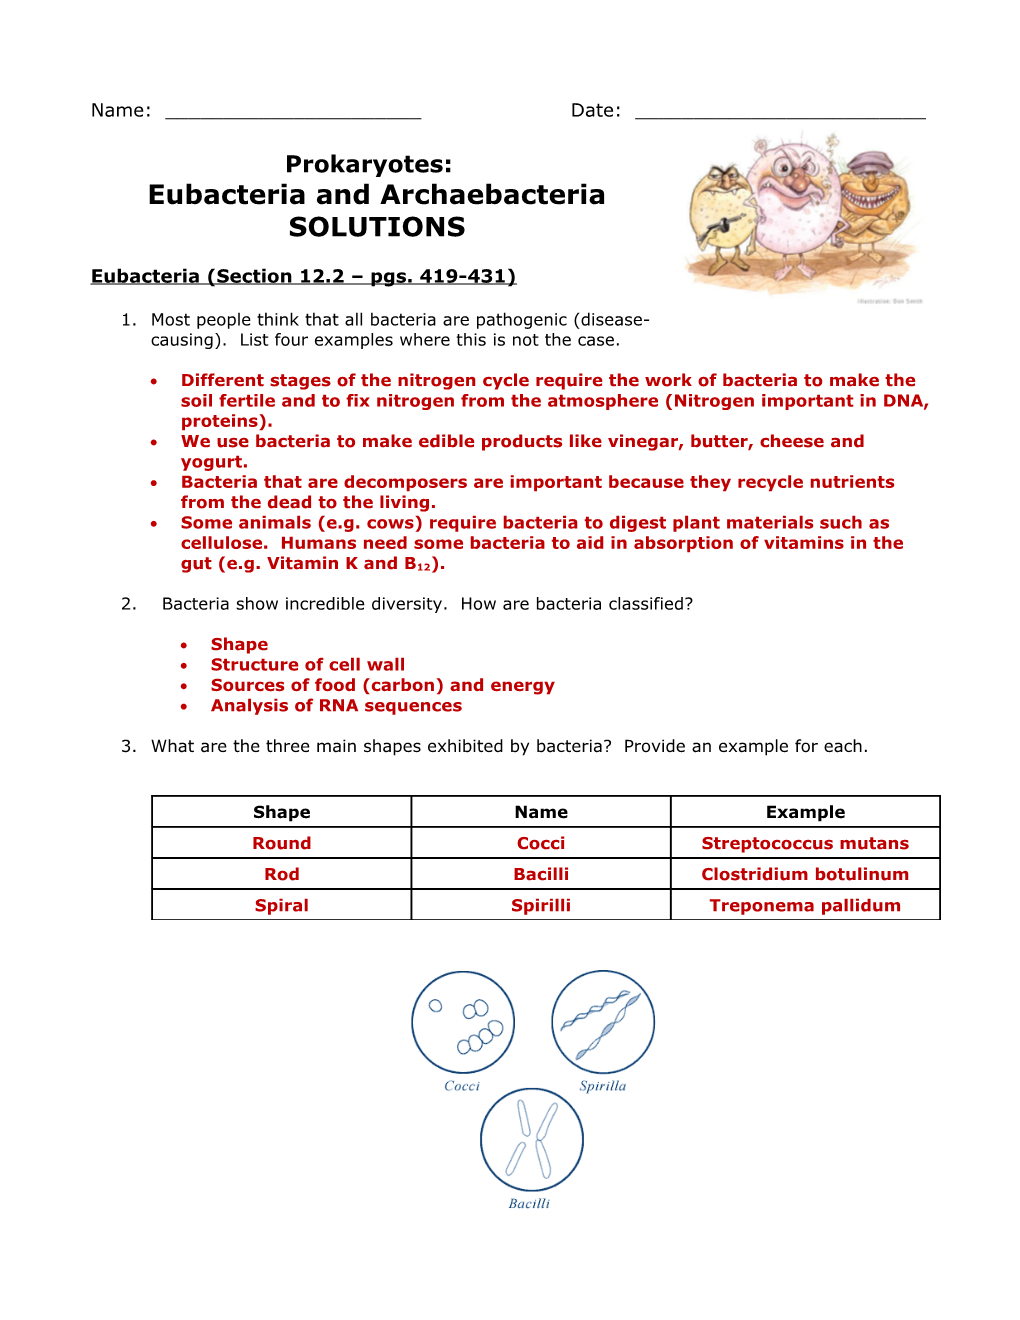 Eubacteria and Archaebacteria